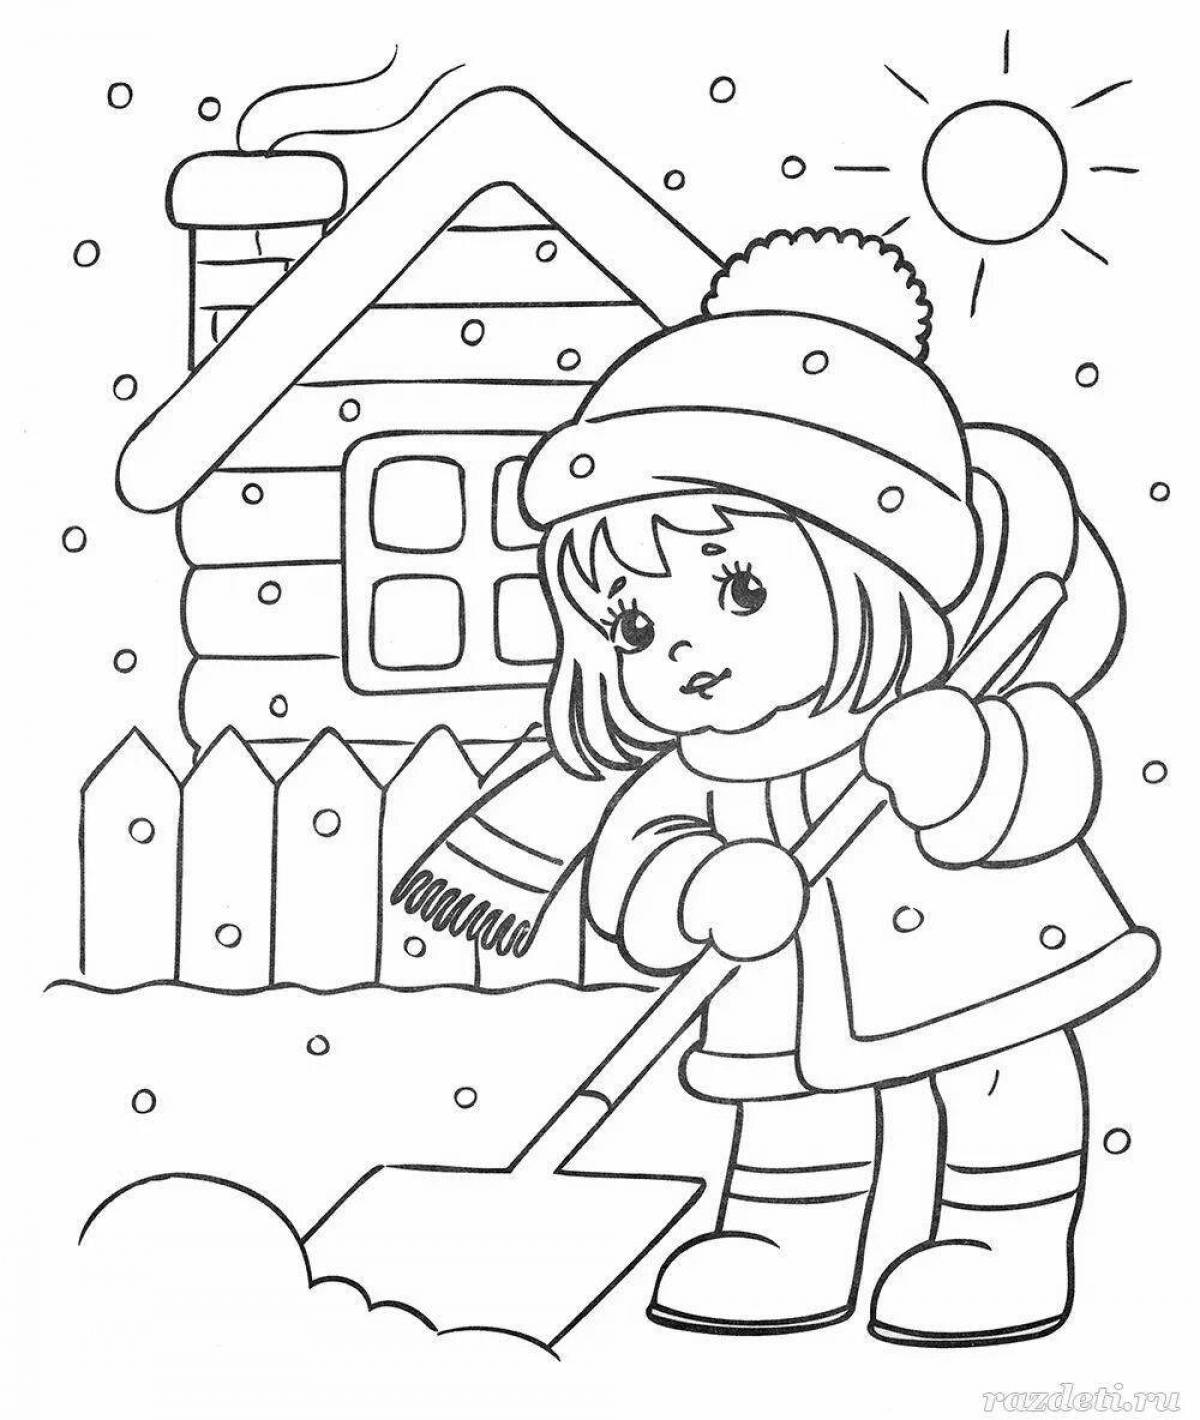 Intriguing winter coloring book for preschoolers